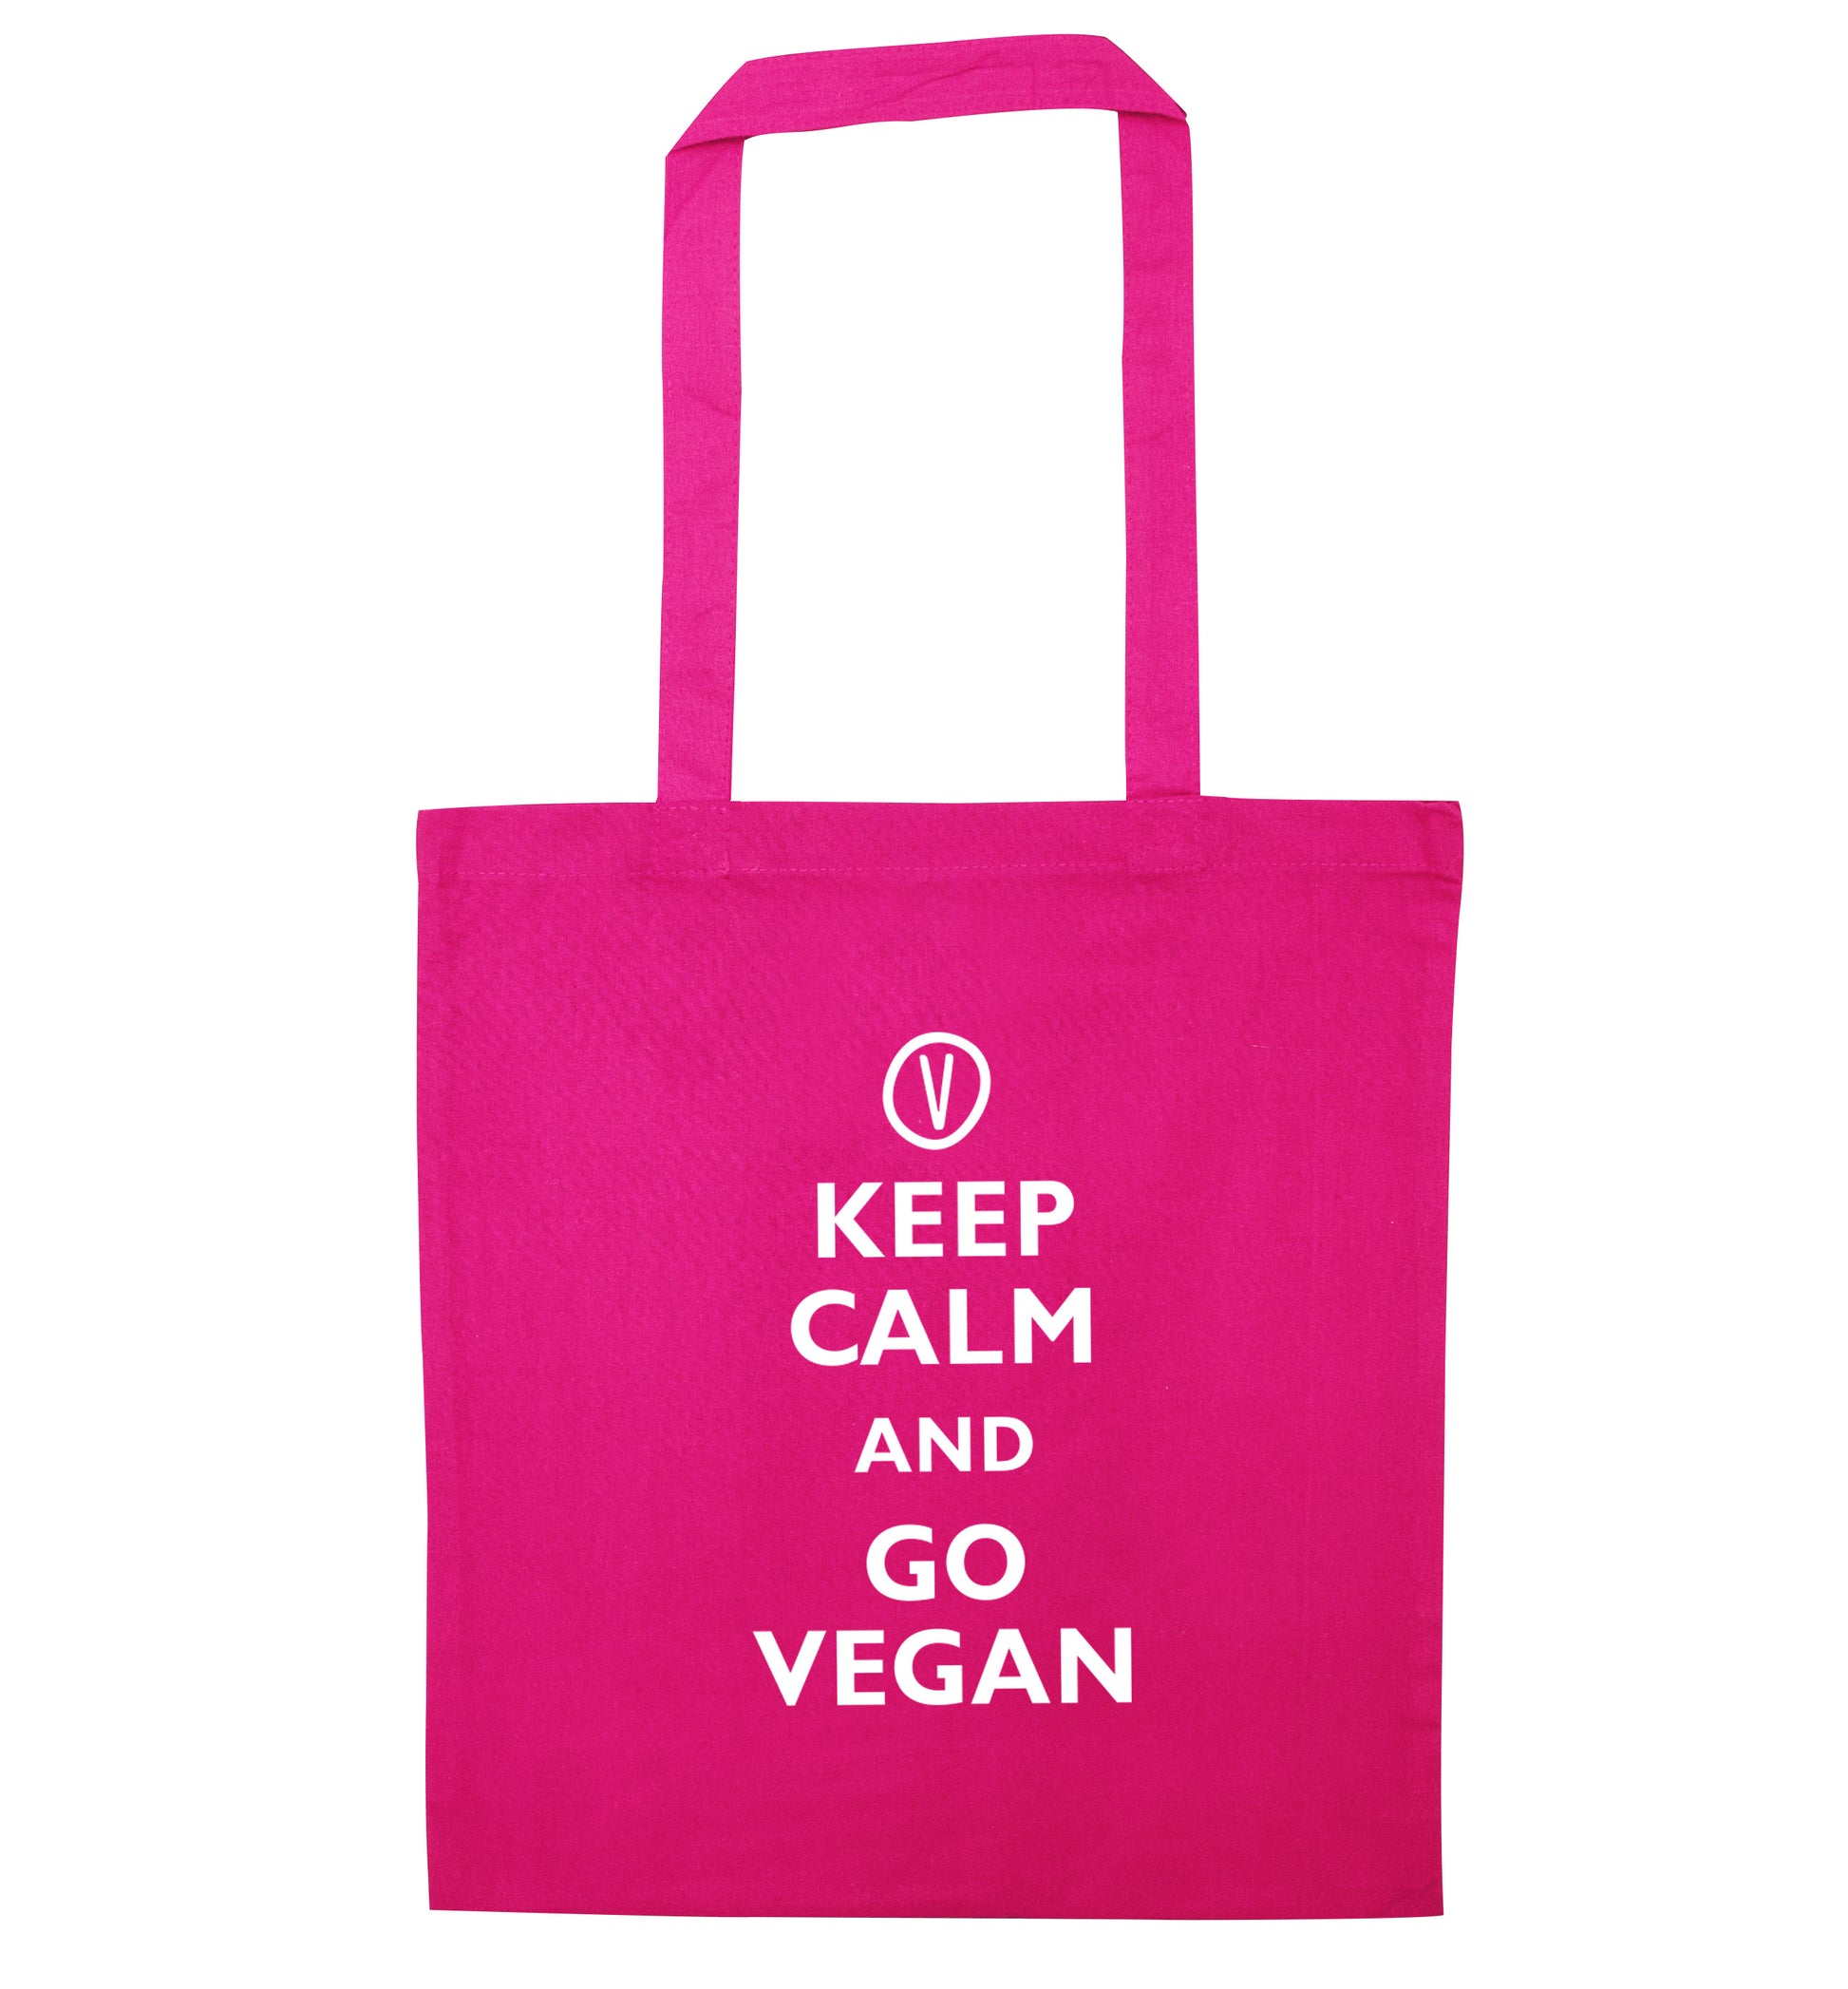 Keep calm and go vegan pink tote bag